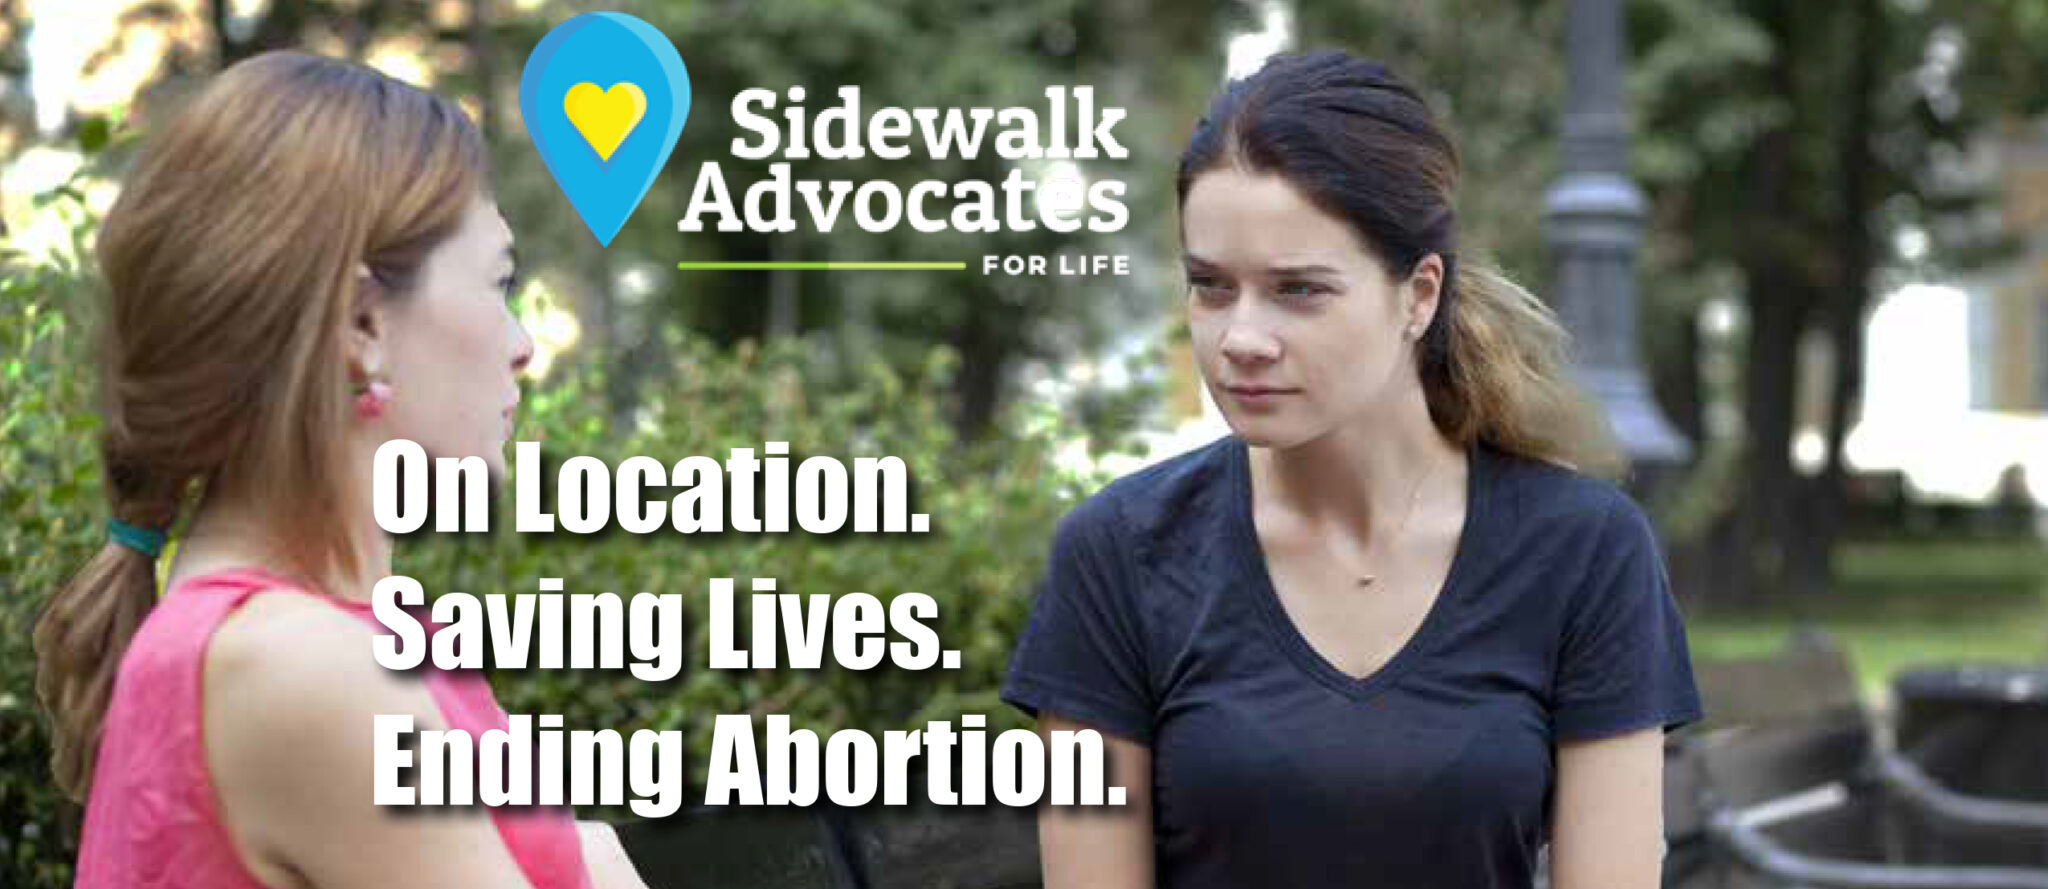 Sidewalk Advocates for Life. On location, saving lives,